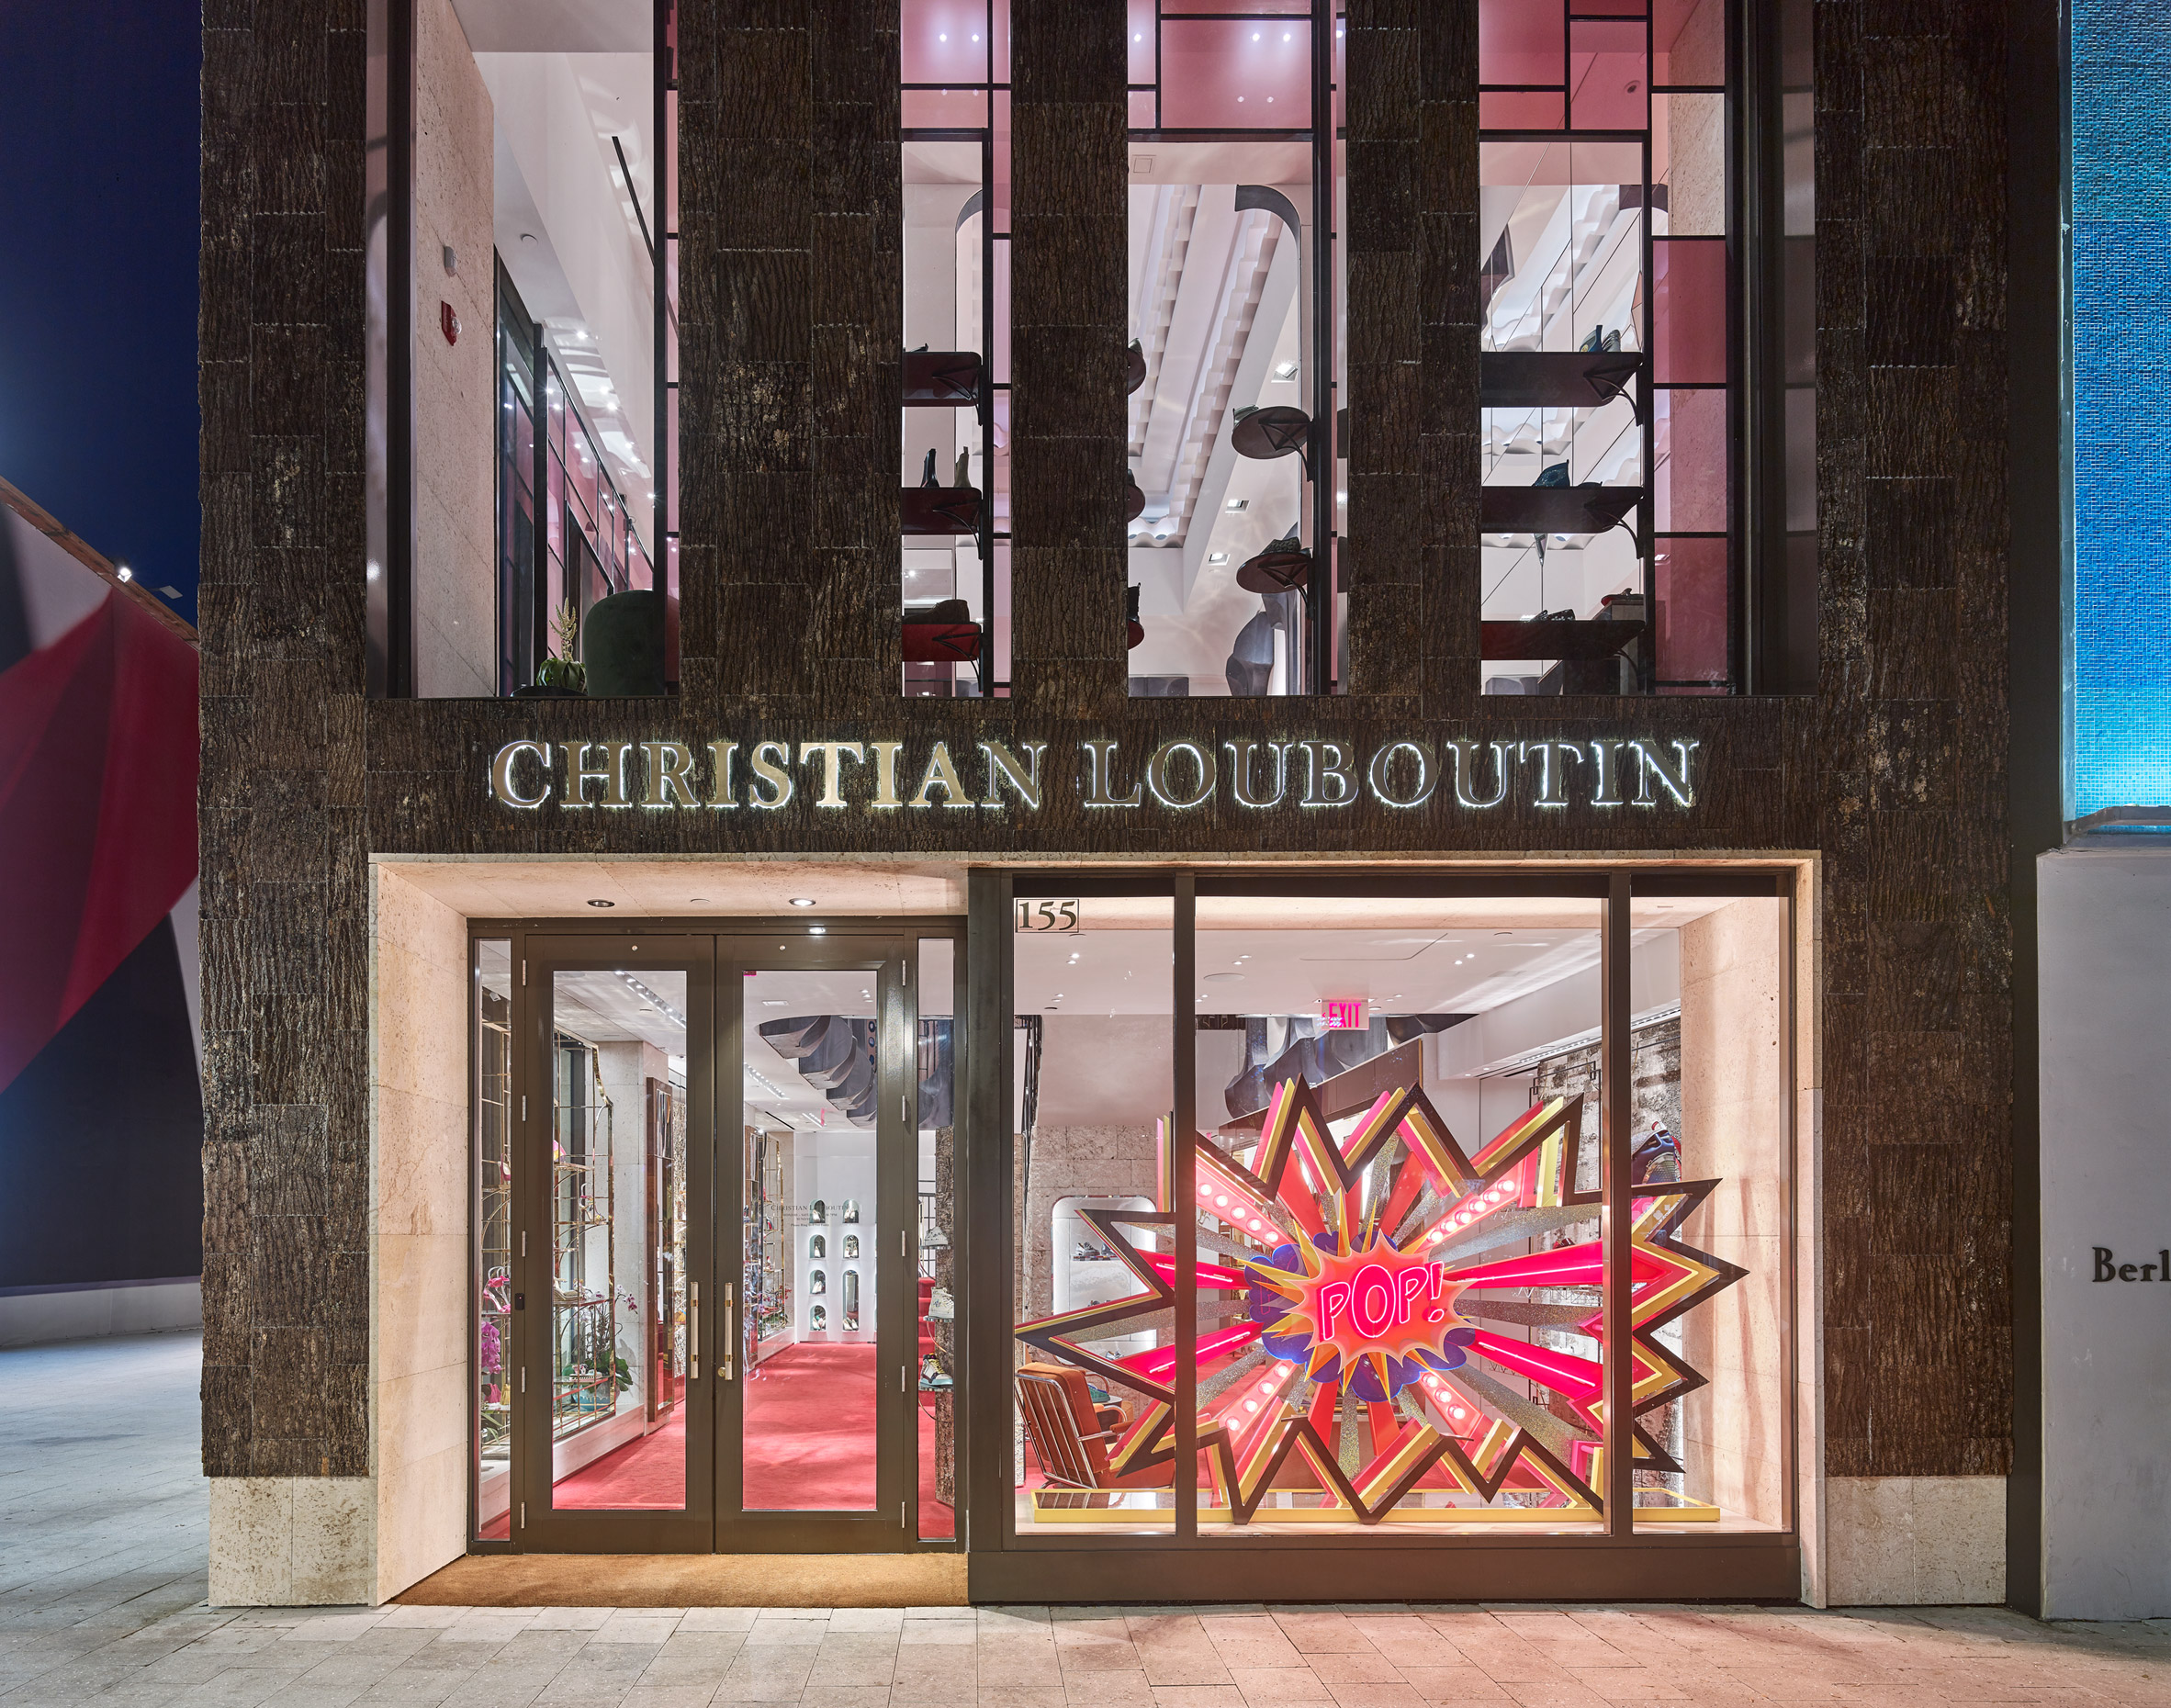 Shop Christian Louboutin and Fleur du Mal in Los Angeles - DuJour